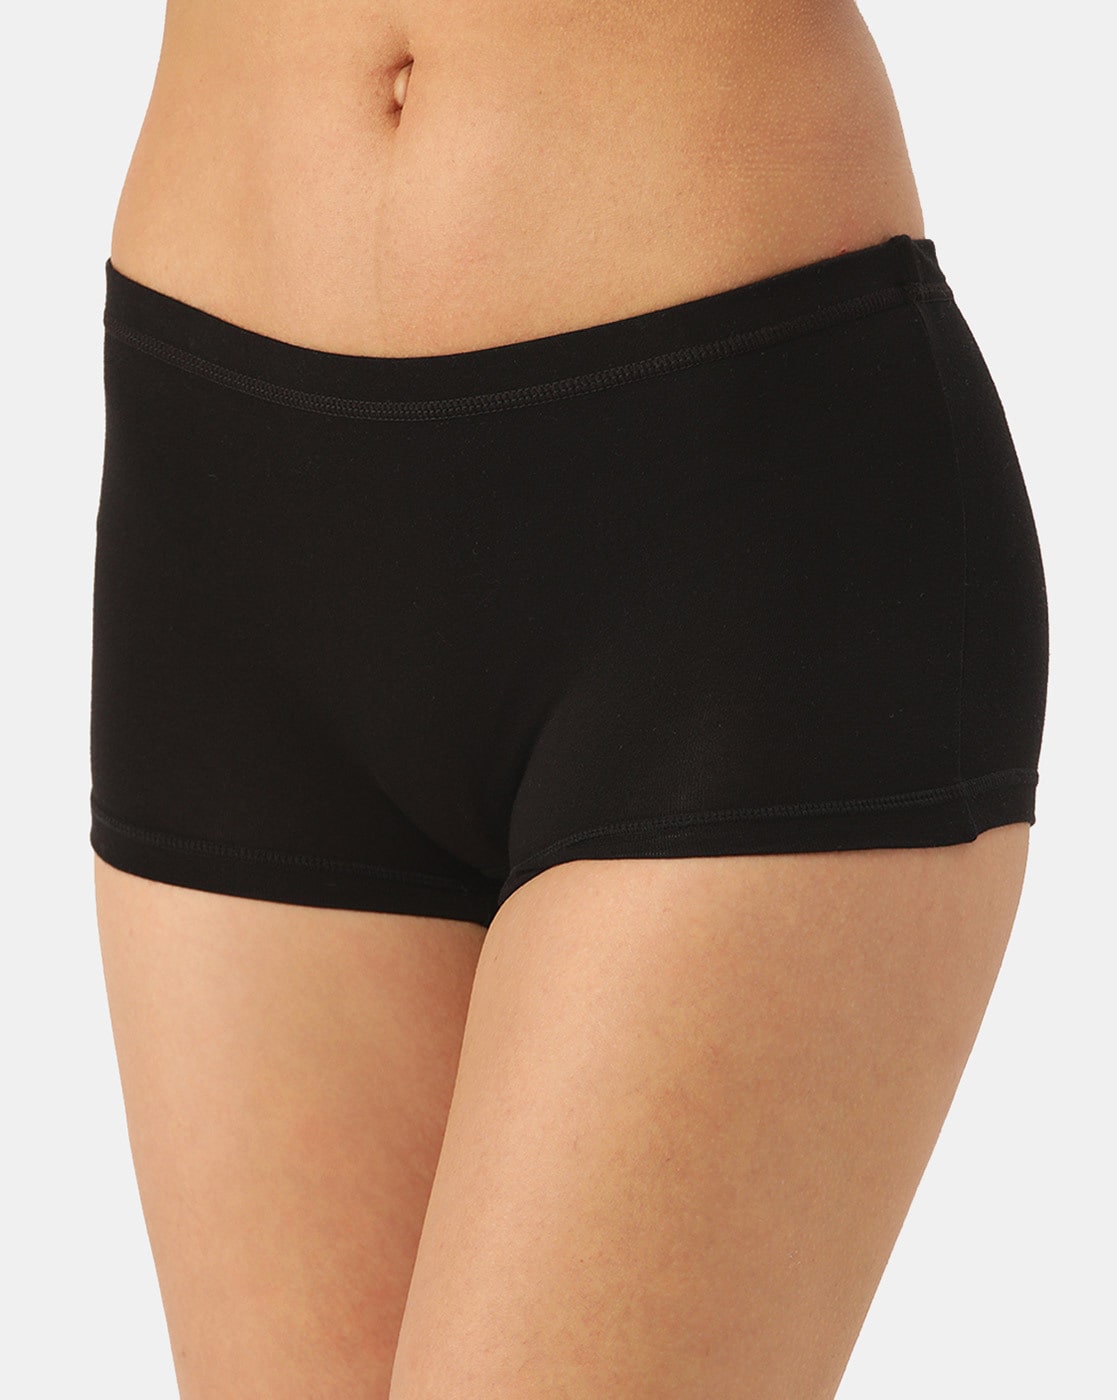 MELERIO Womens Comfortable Seamless Boyshorts Panties, Smooth Underwear  Shorts for Under Dresses (Nude, X-Large) price in UAE,  UAE